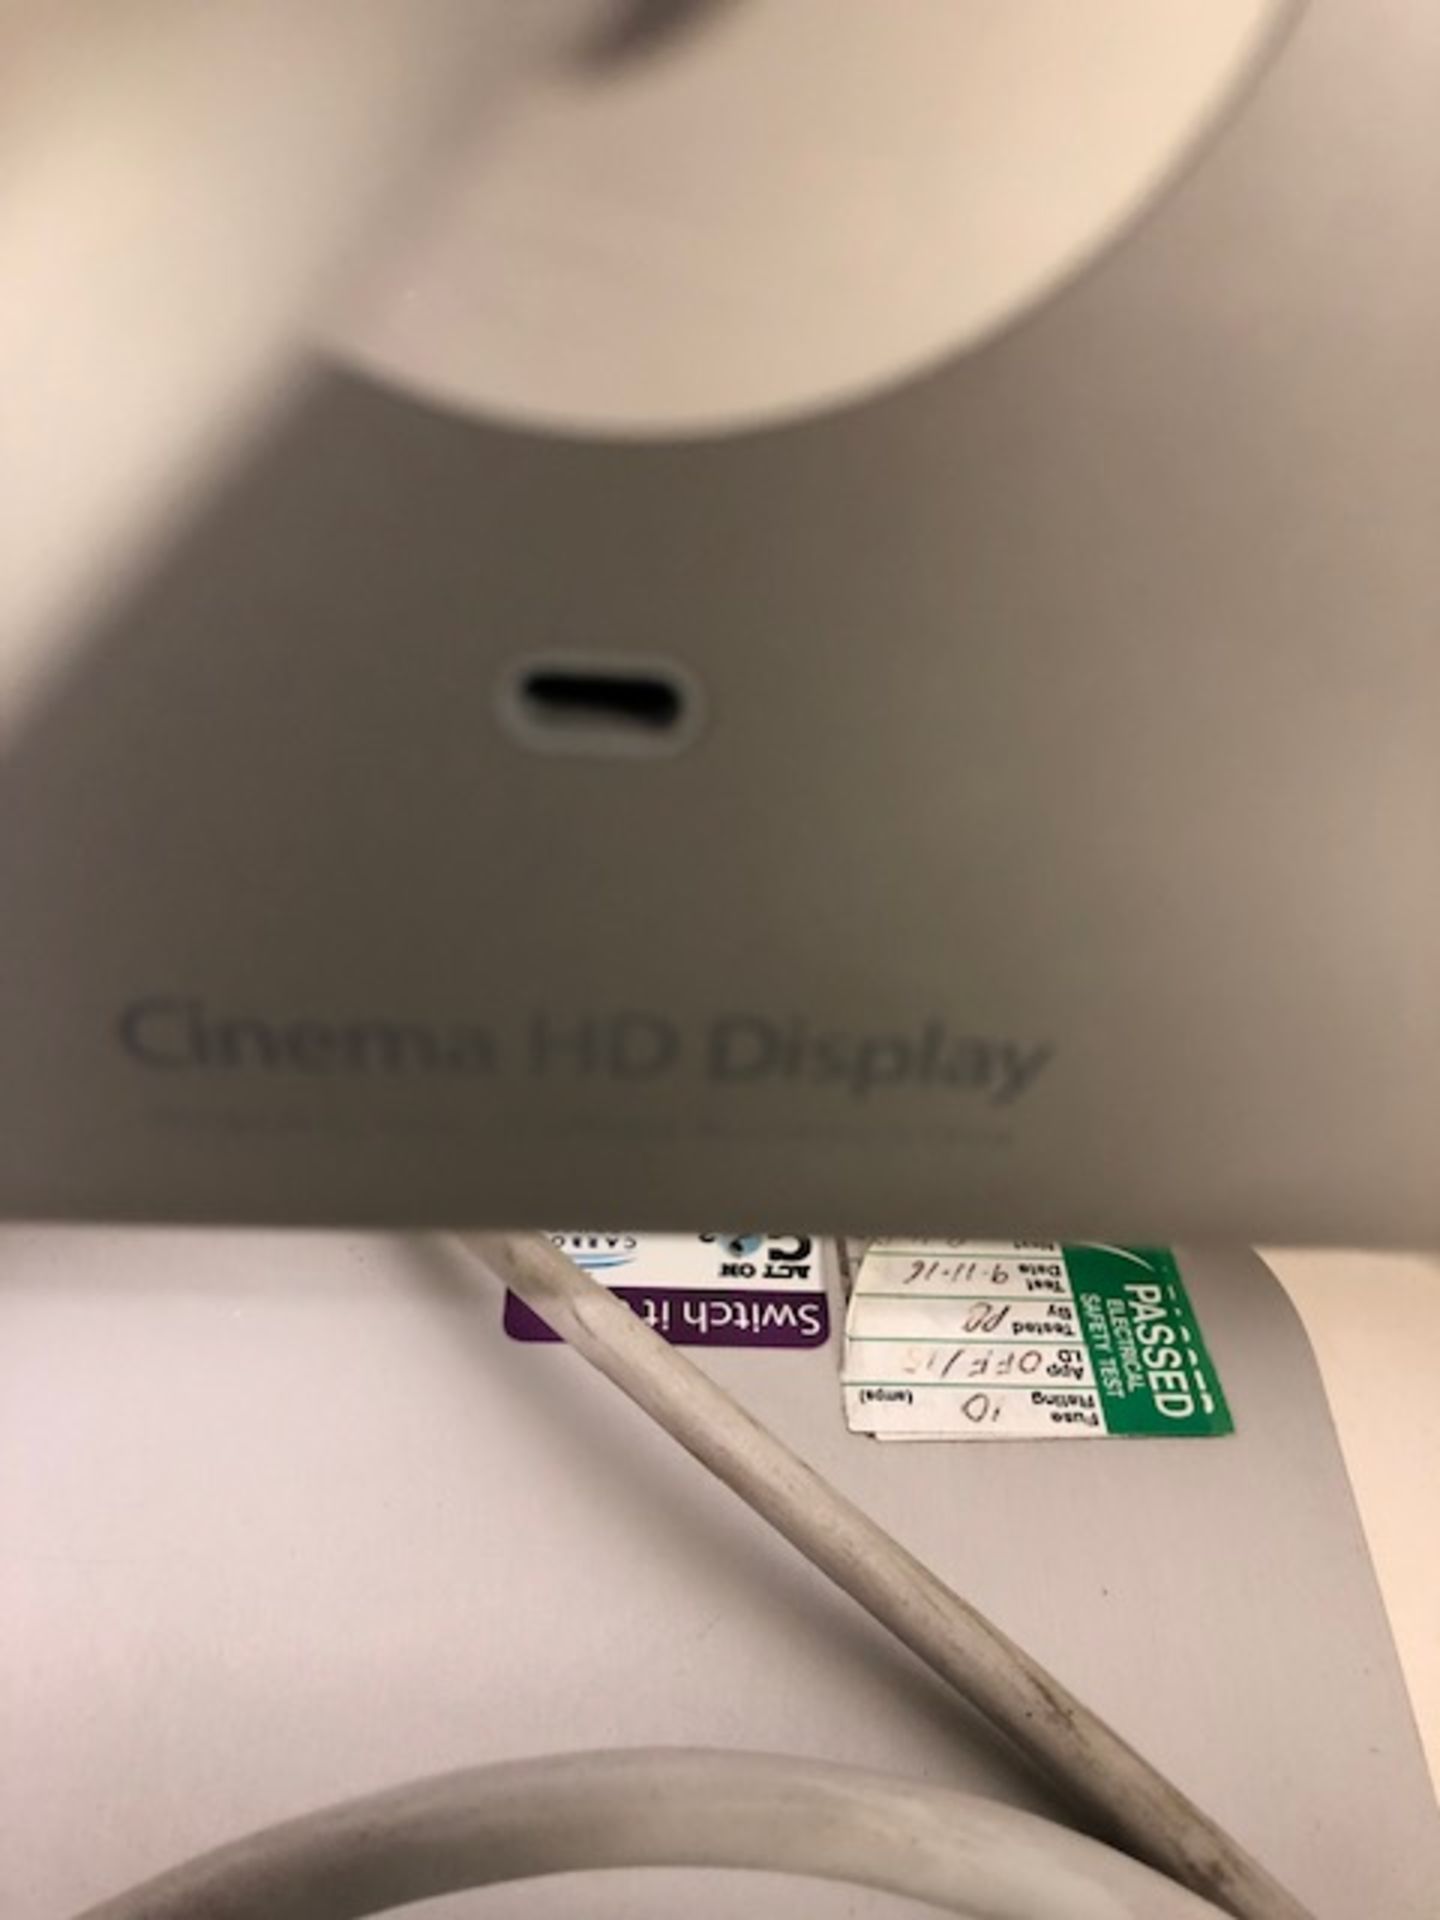 Apple A1082 Cinema Display 23" Widescreen Aluminum Monitor - Image 5 of 5